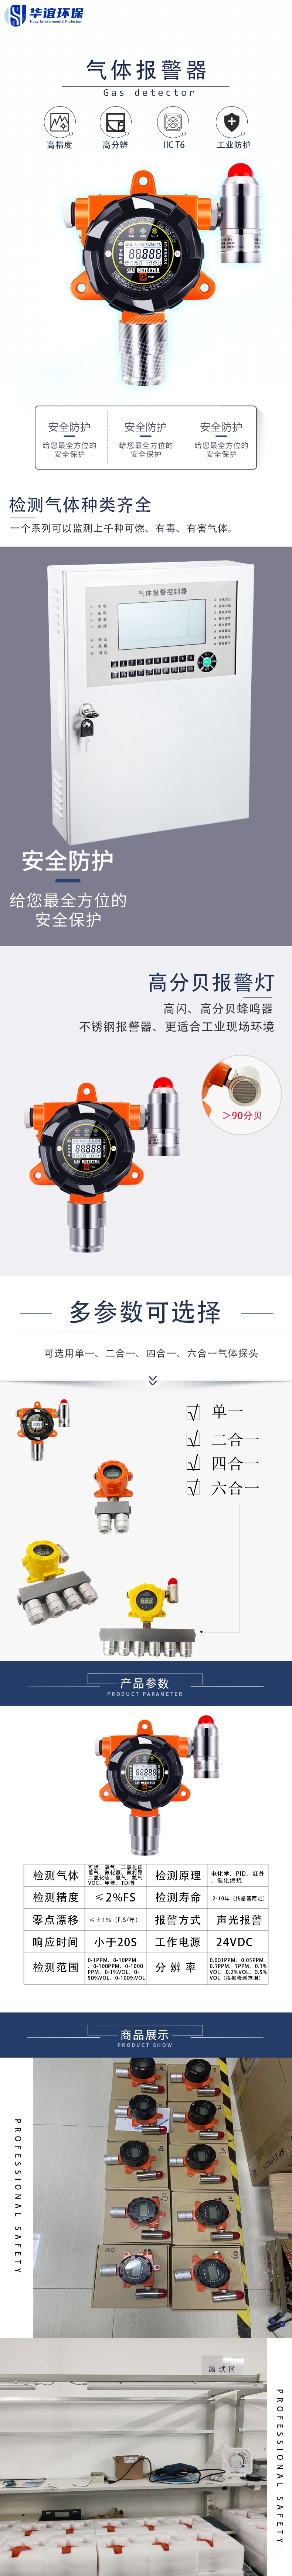 j9九游会真人游戏第一品牌HY18598002268 膦气体警报器(图2)